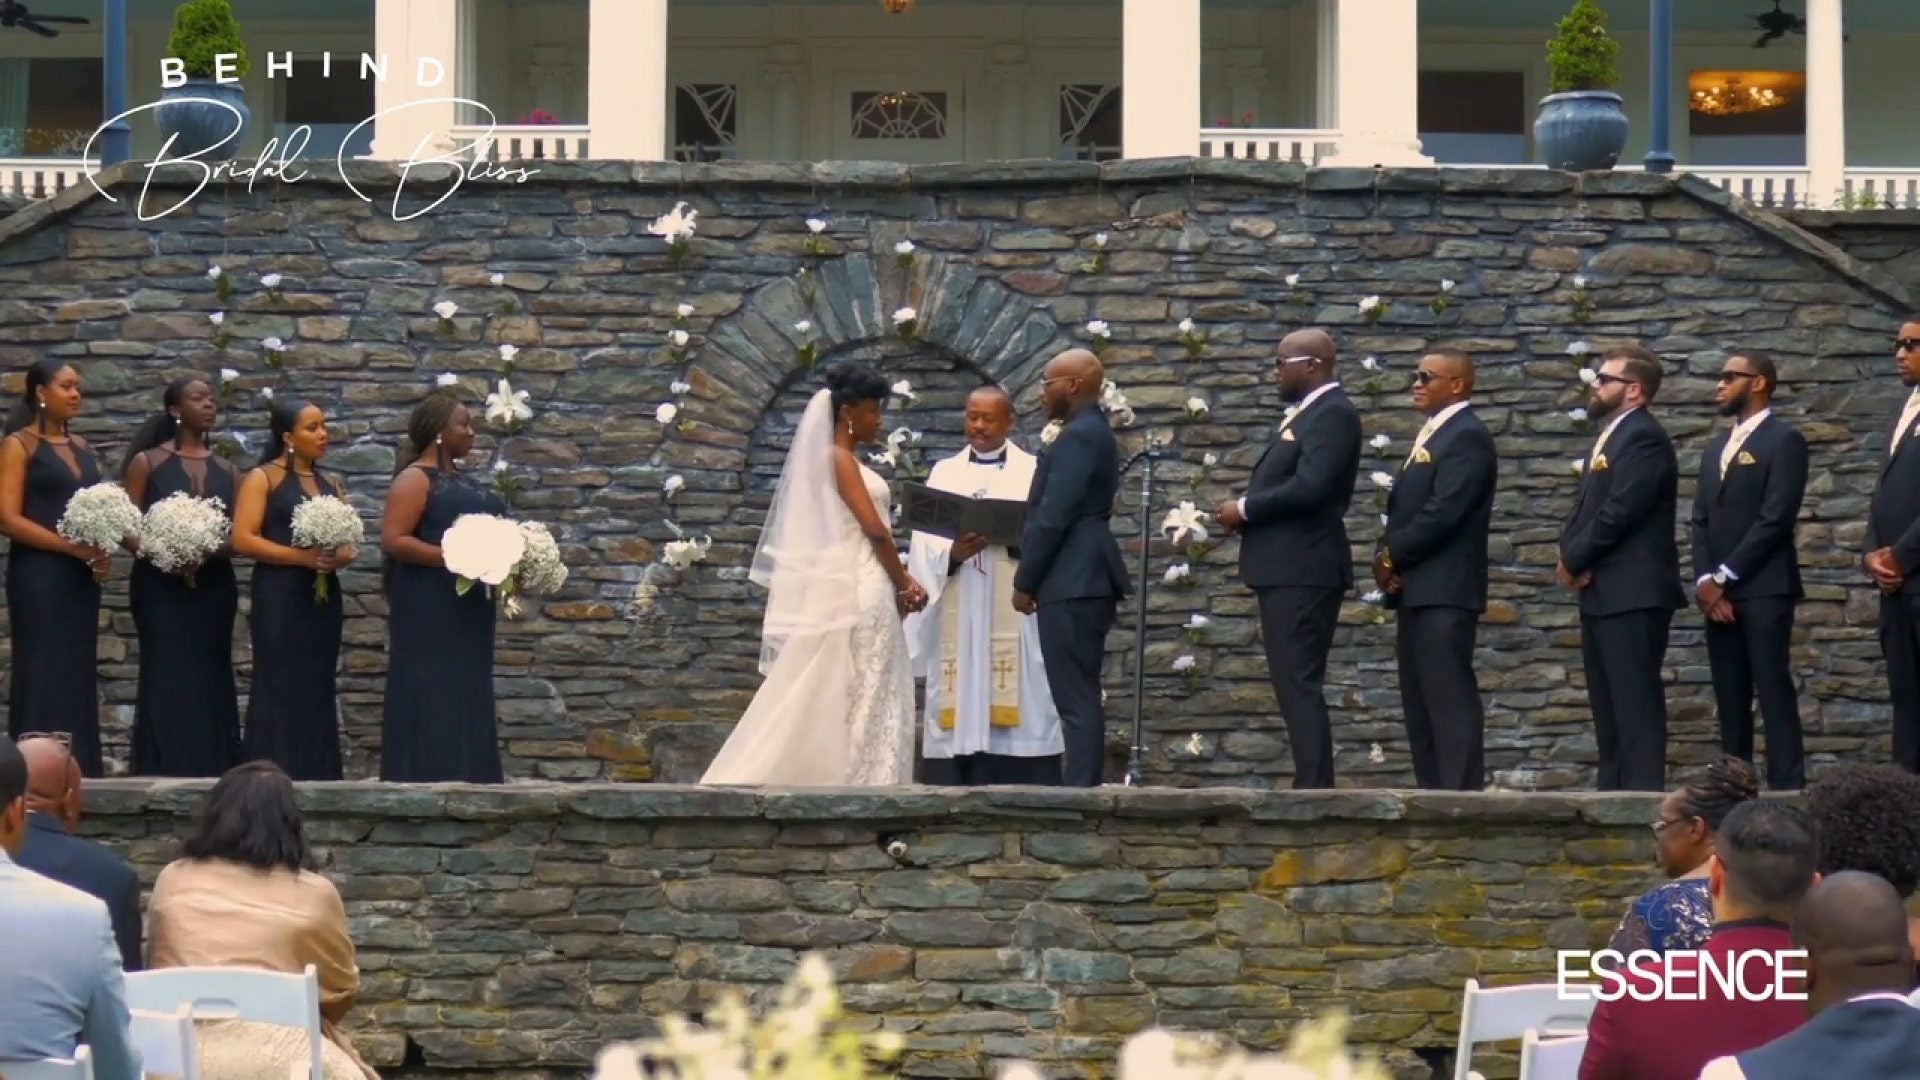 ESSENCE Introduces 'Behind Bridal Bliss' Wedding Video Series - Essence